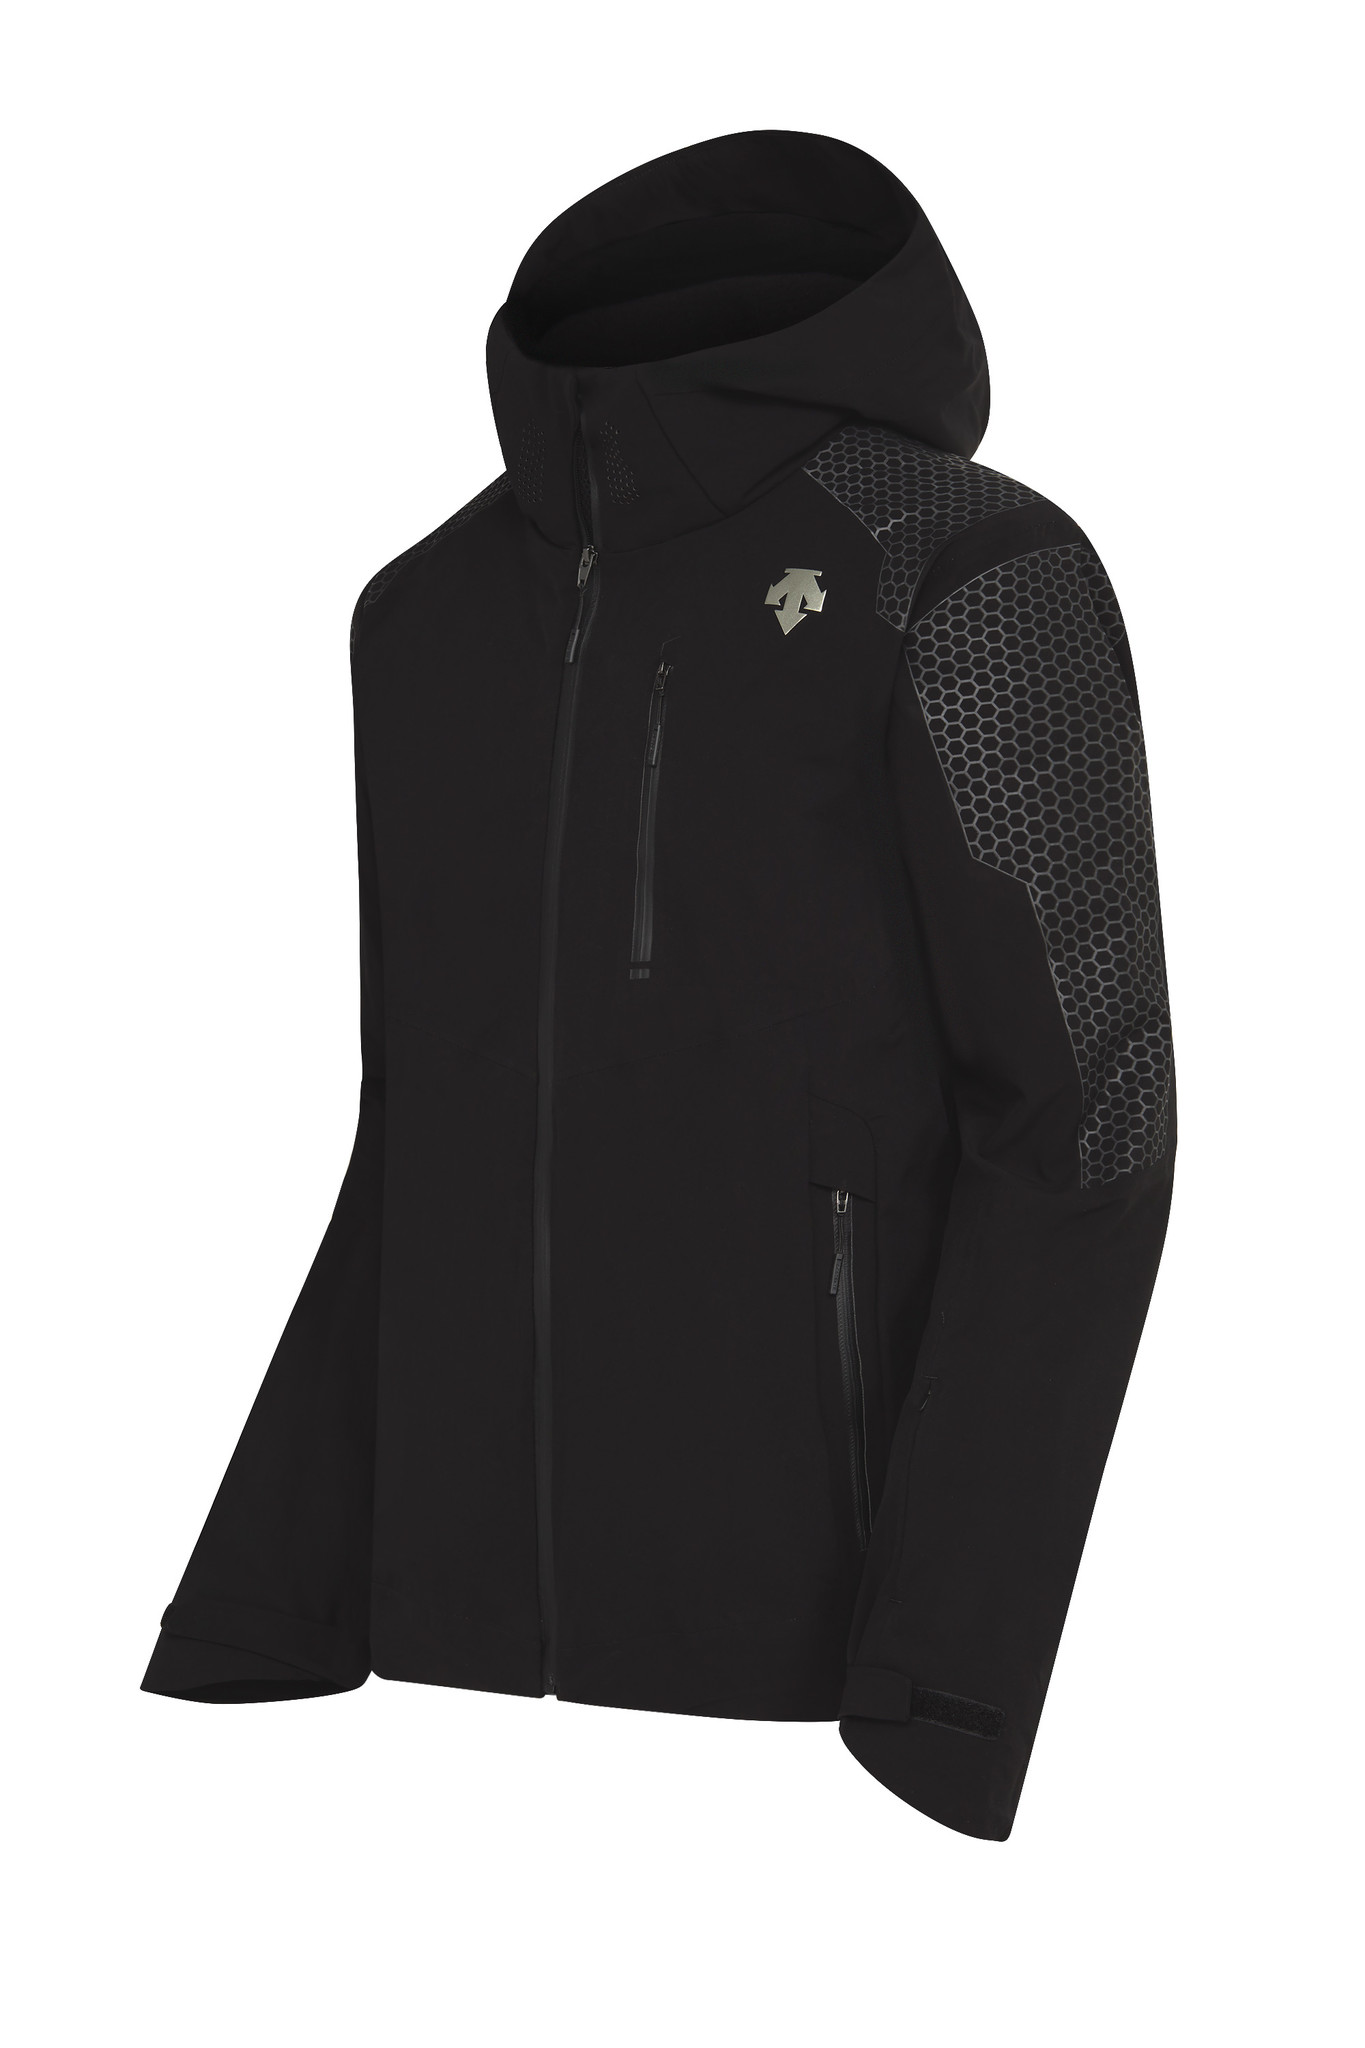 Descente Light Weight Grapala Men's Jacket - Black - XL| Ski Essentials